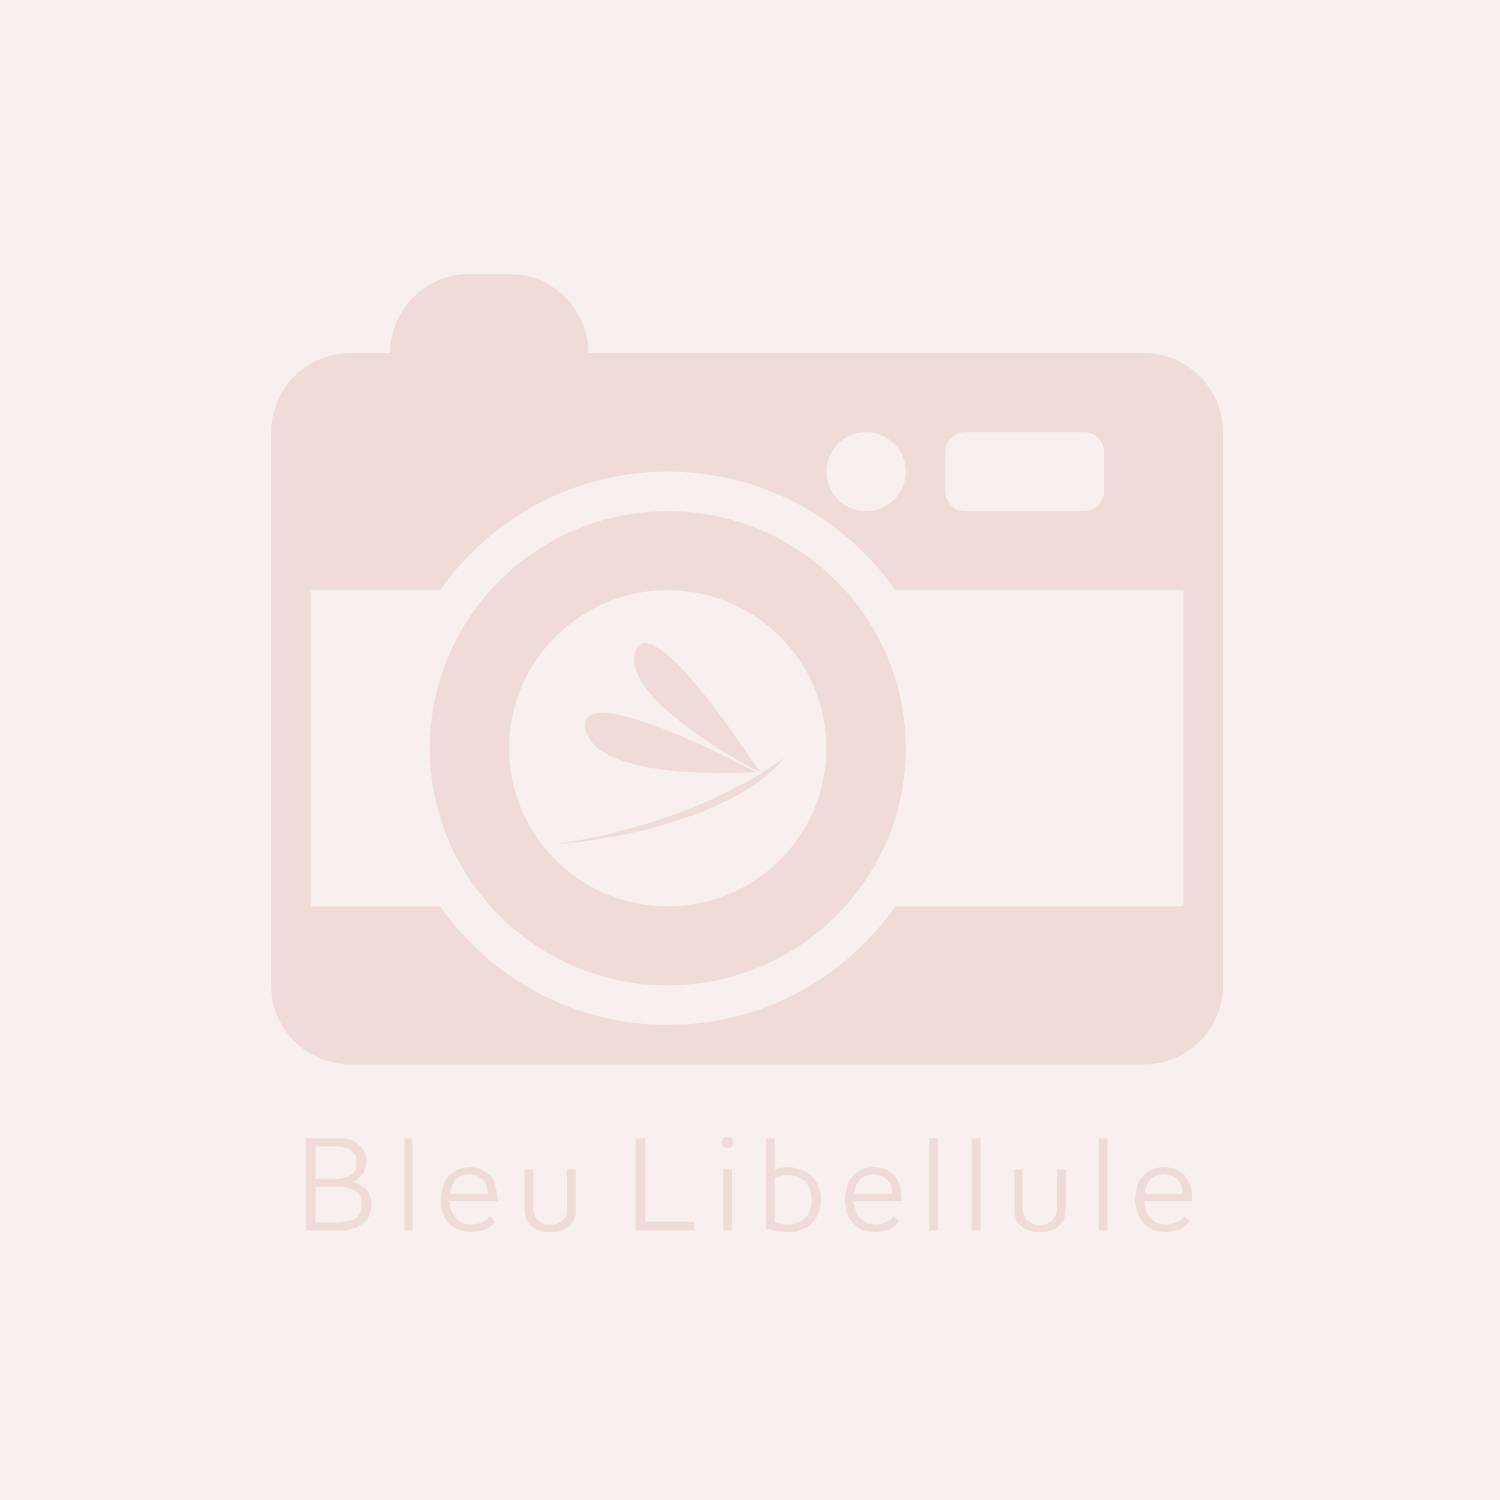 Bleu Libellule Eau de parfum Pétillante spray 15ml, Femme